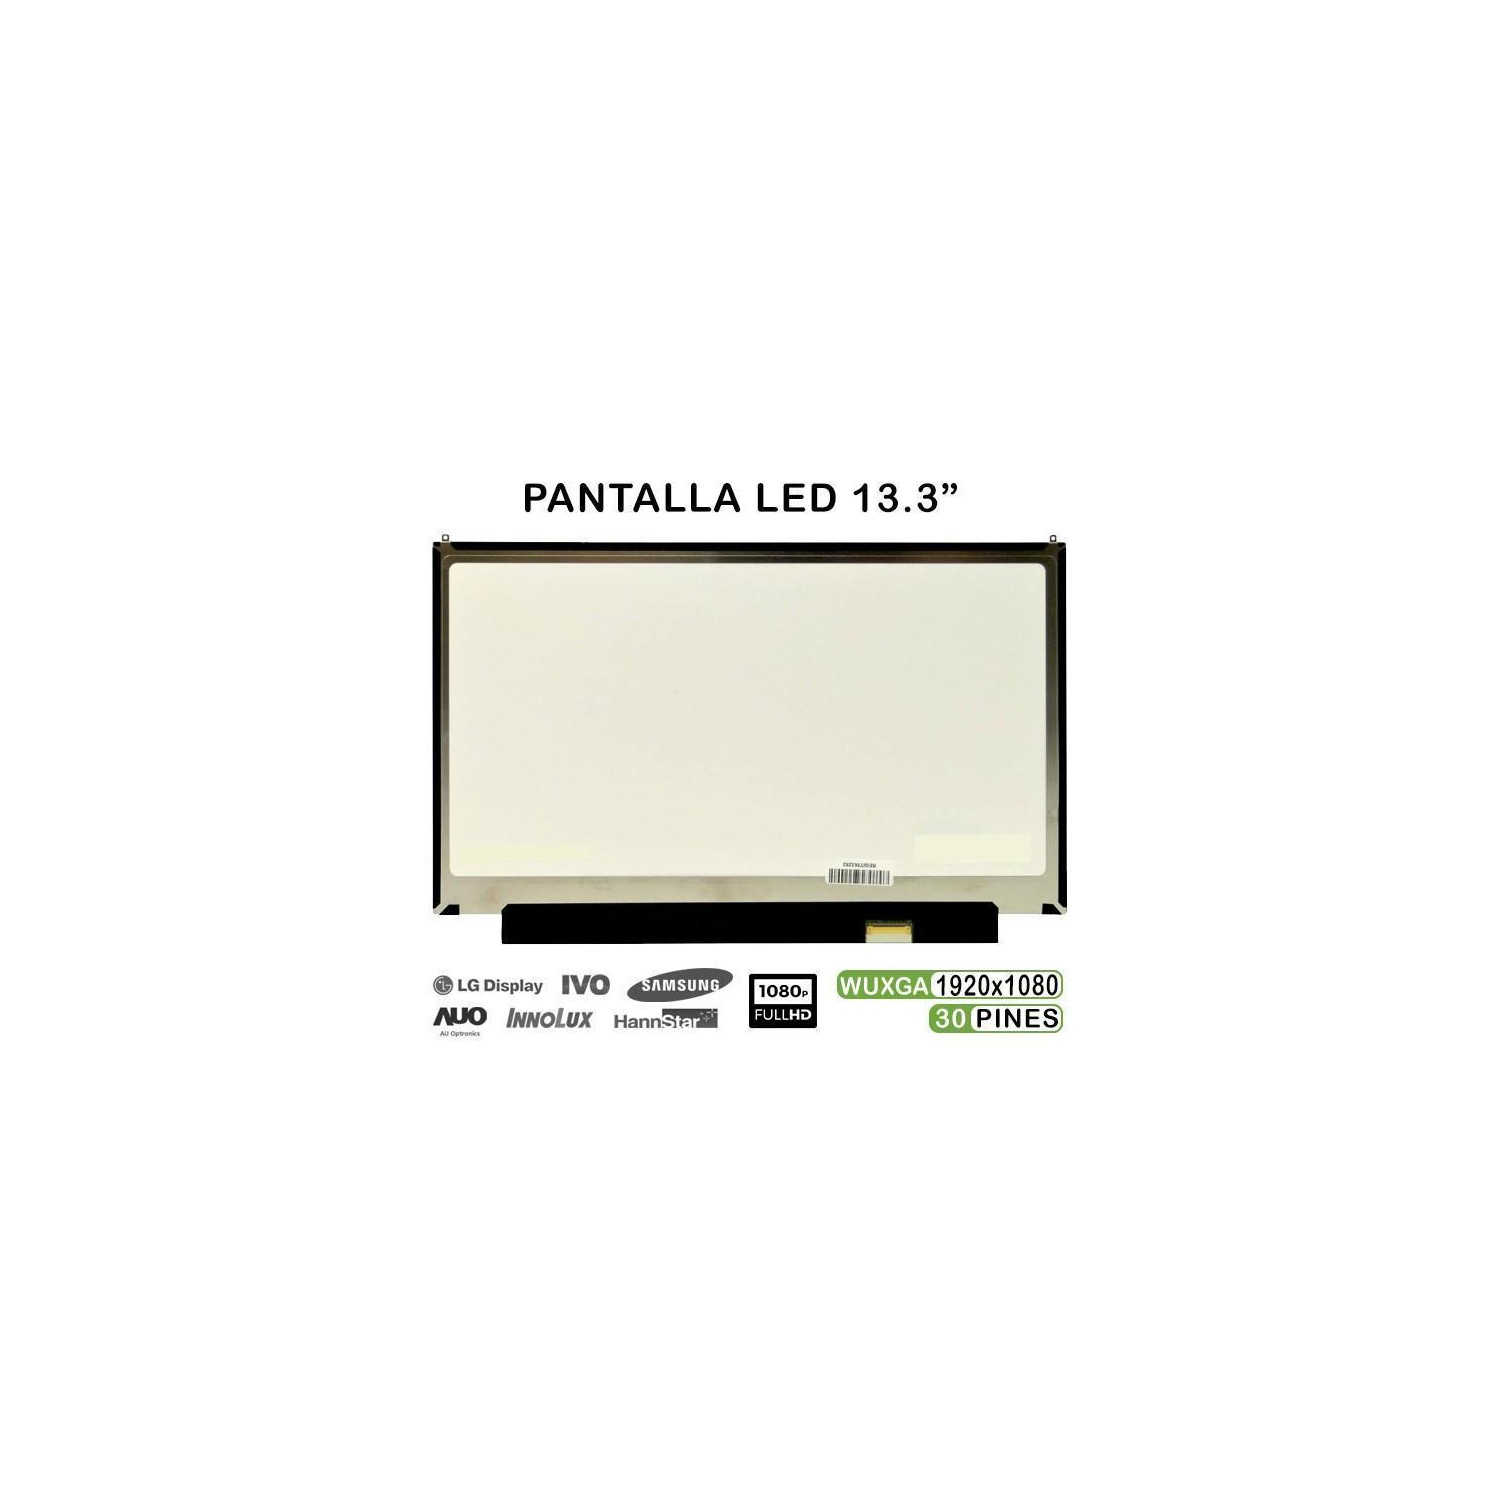 PANTALLA LED DE 13.3" PARA PORTÁTIL LP133WF6-SPB1 IPS FHD 30 PINES